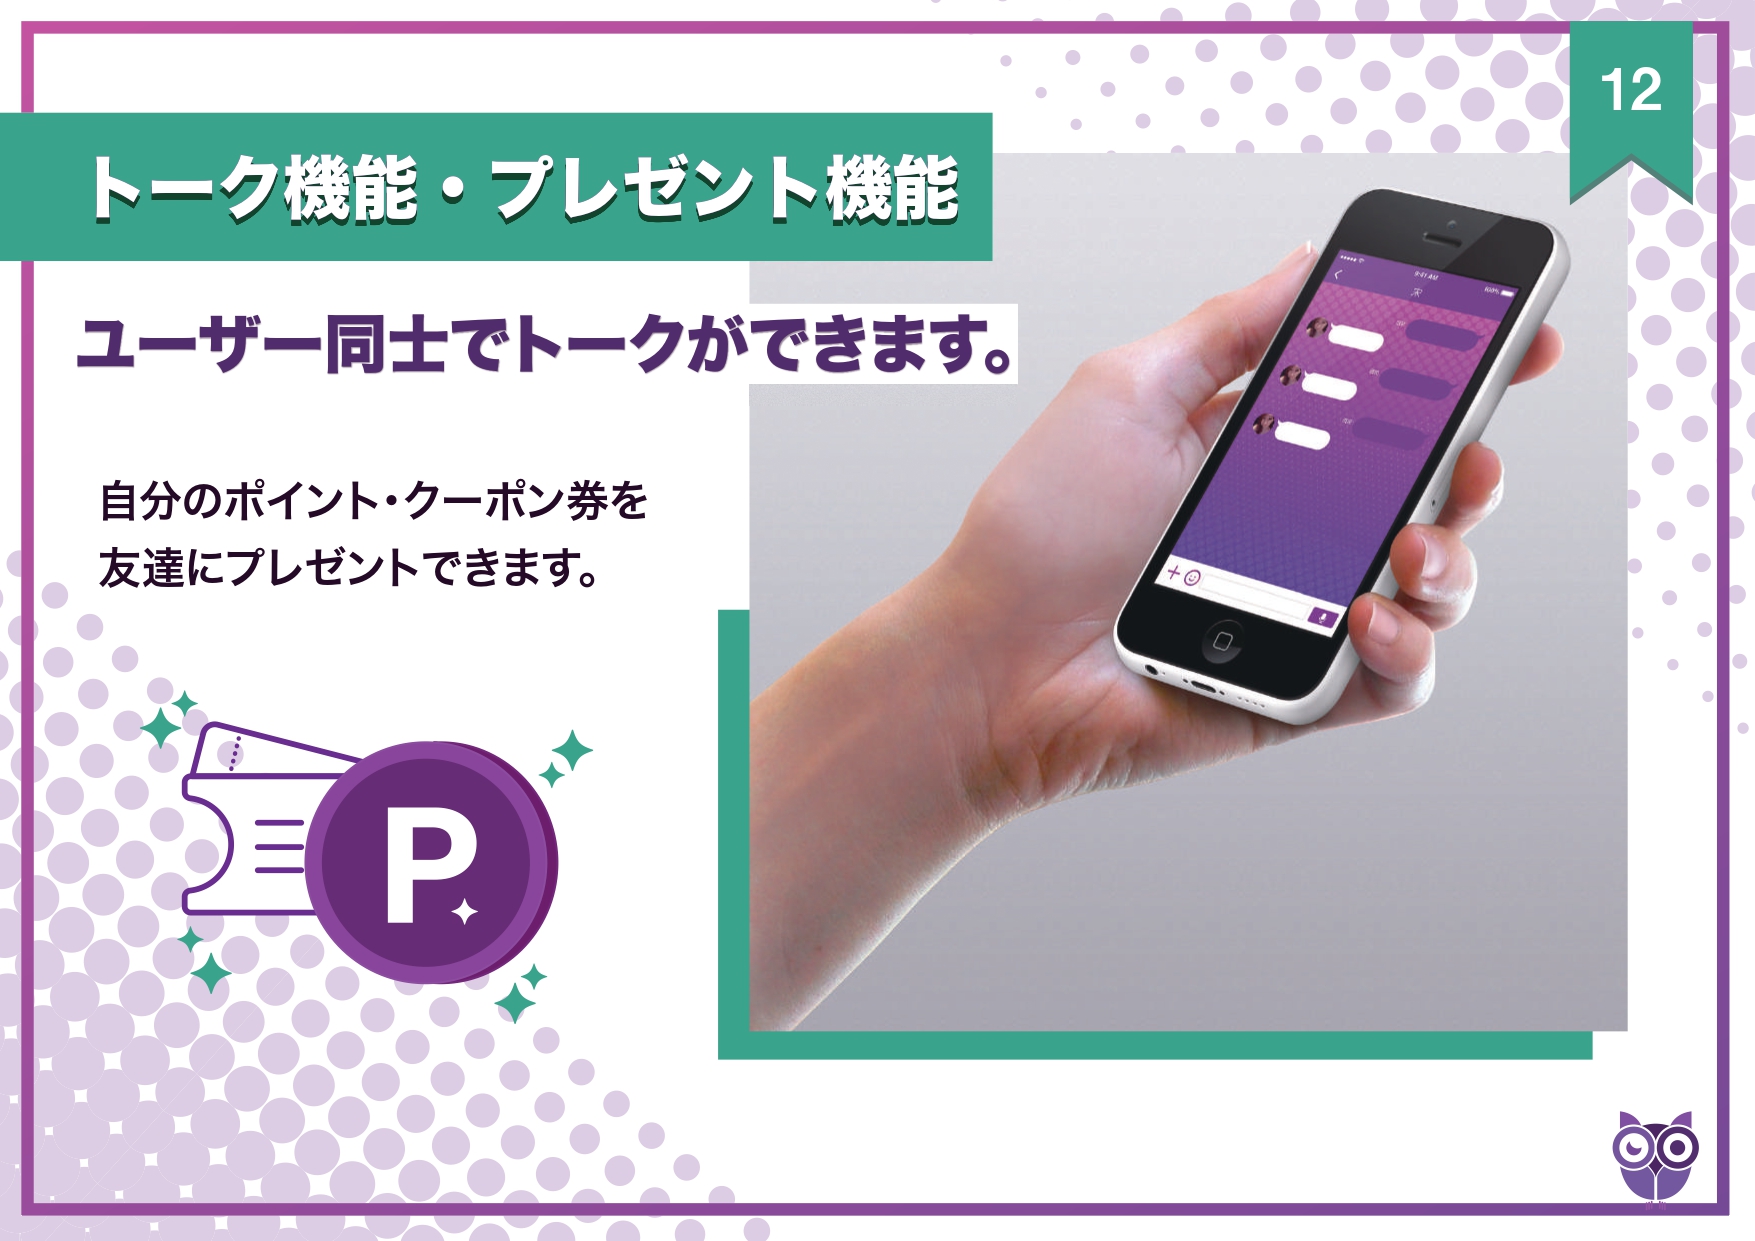 JP NIGHTアプリ トーク機能・プレゼント機能